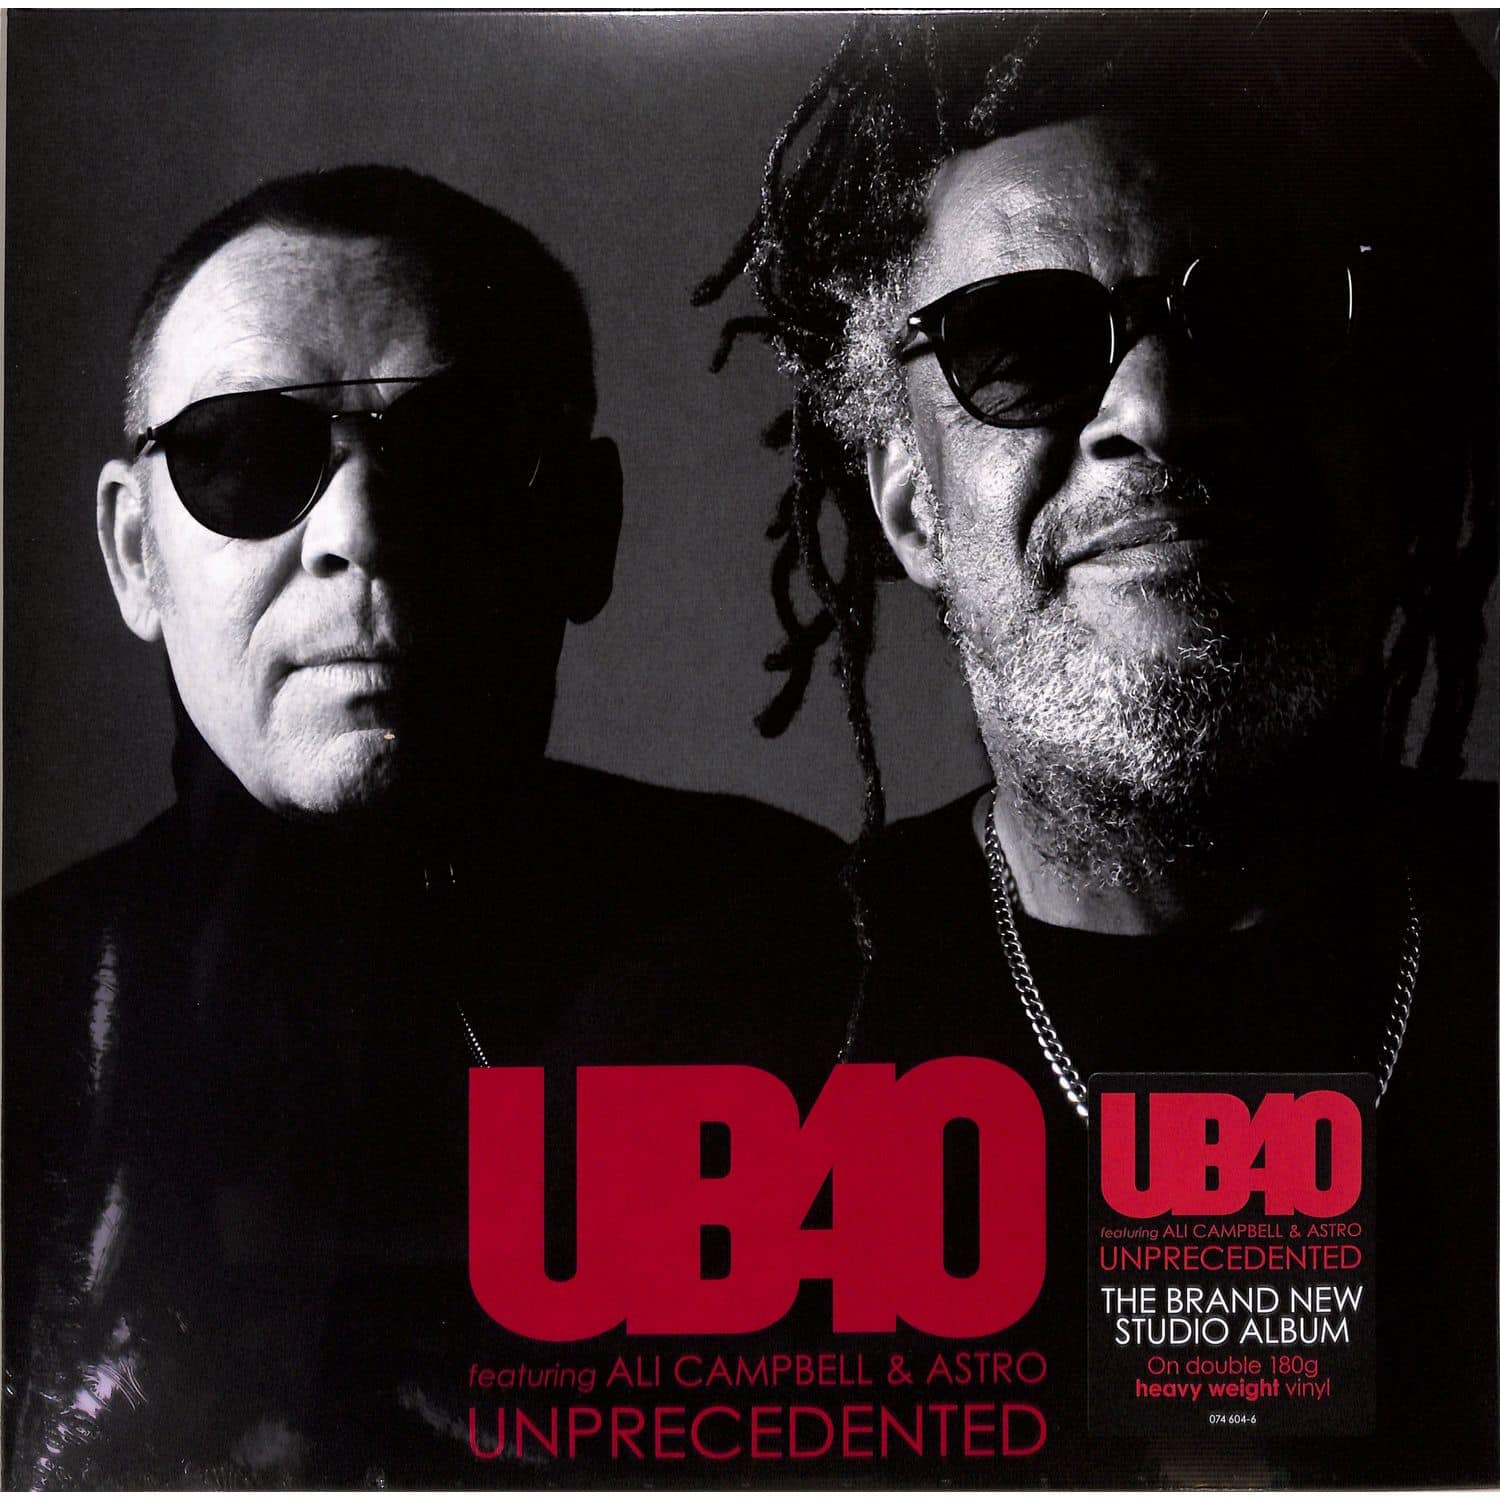 UB40 Featuring Ali Campbell & Astro - UNPRECEDENTED 